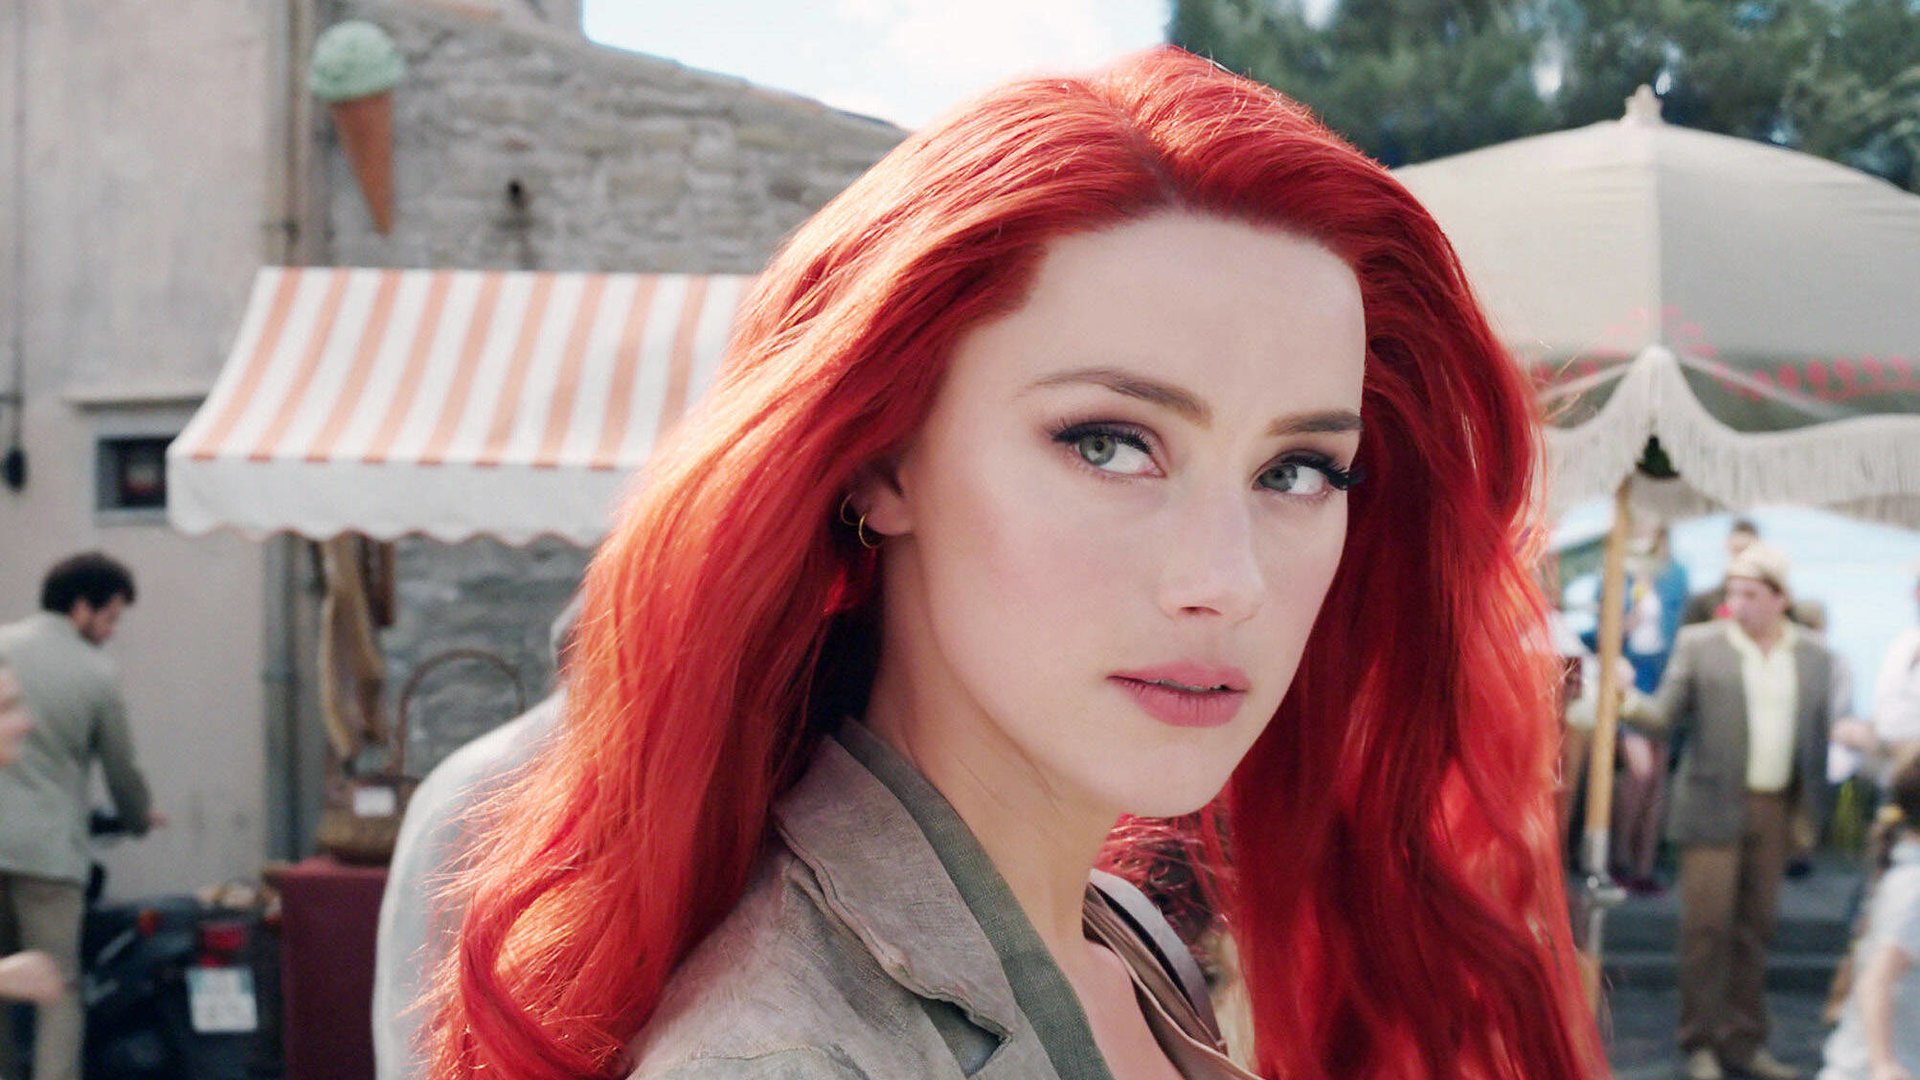 #Fast ganz gestrichen: Studio kürzt vehement „Aquaman 2“- Szenen mit Amber Heard